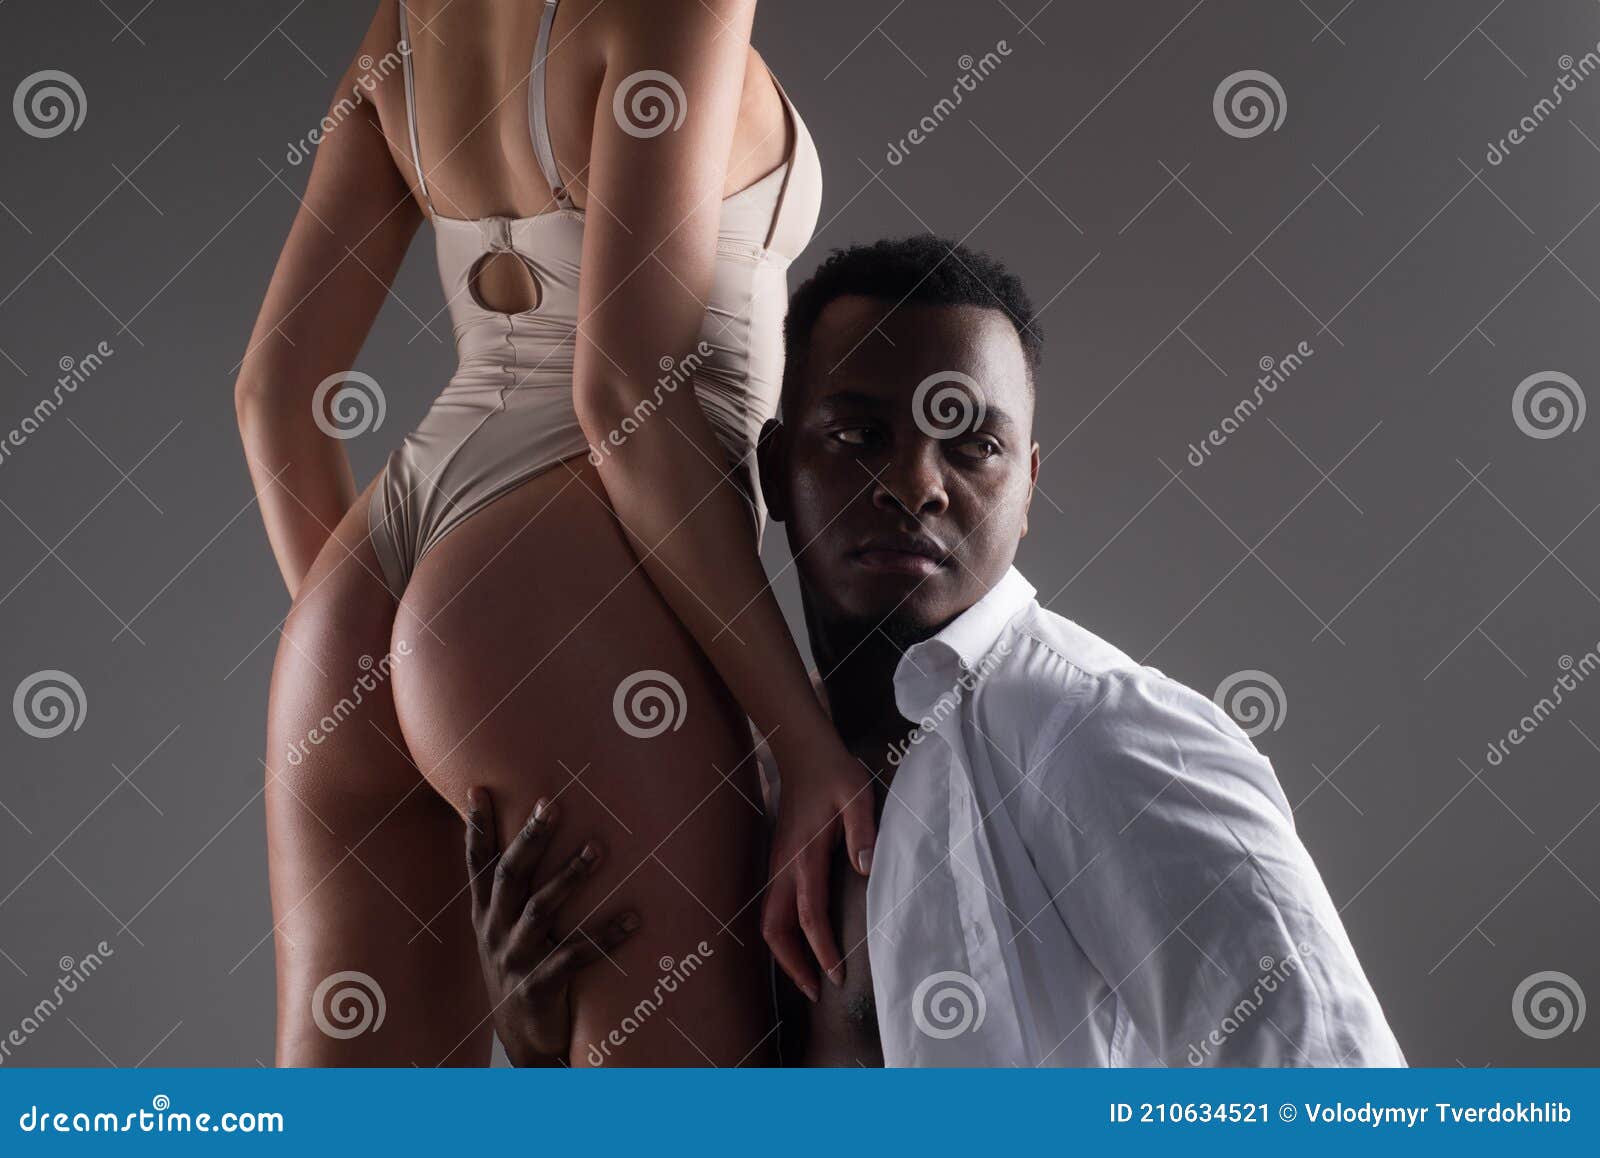 Multiethnic Couple. Interracial Sex. Passionately Embracing. Love photo image